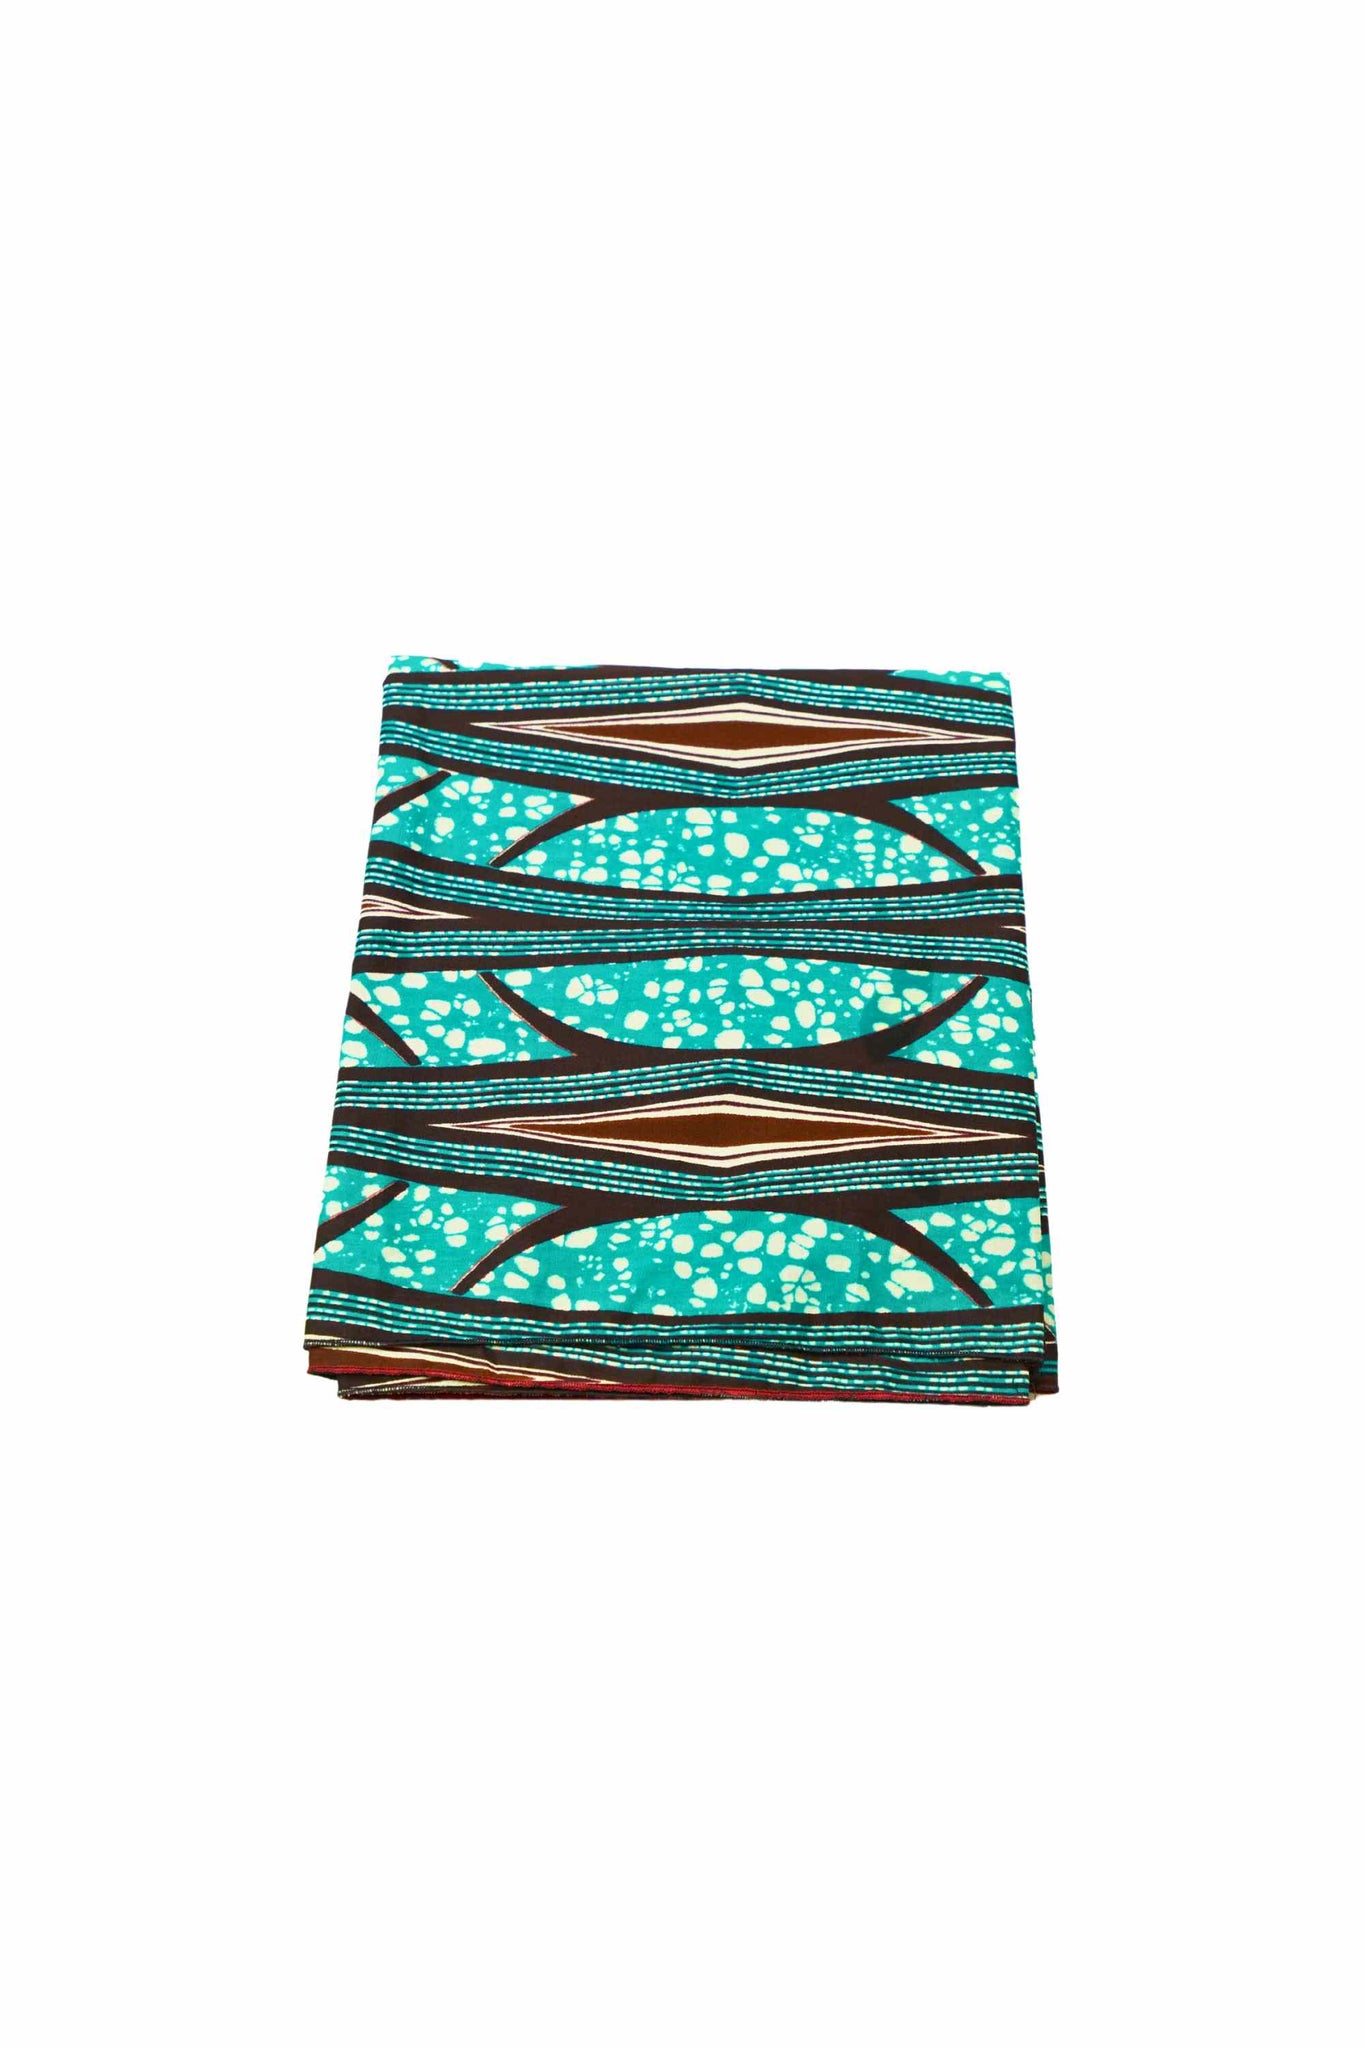 Kyril Headwrap - Blue and Cyan African Ankara Wax Cotton Print